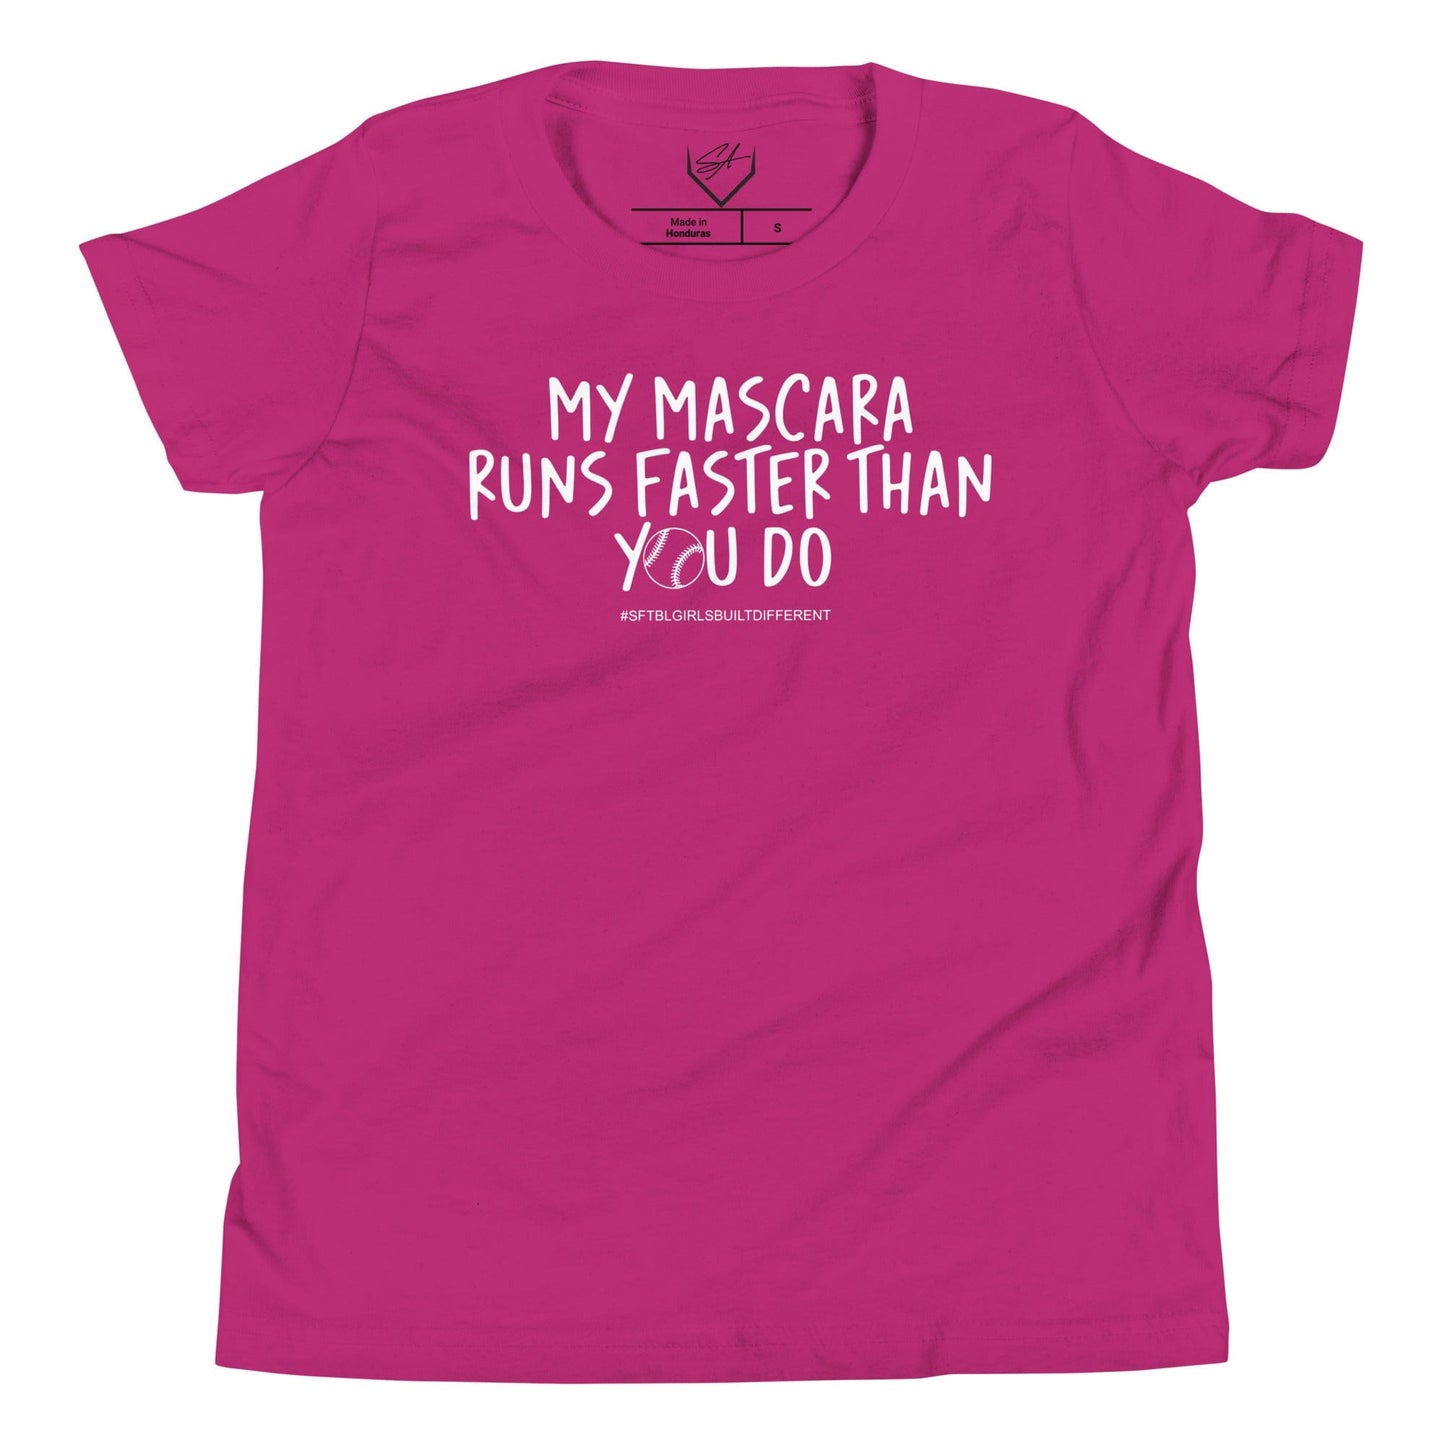 My Mascara Runs Faster Than You Do - Youth Tee